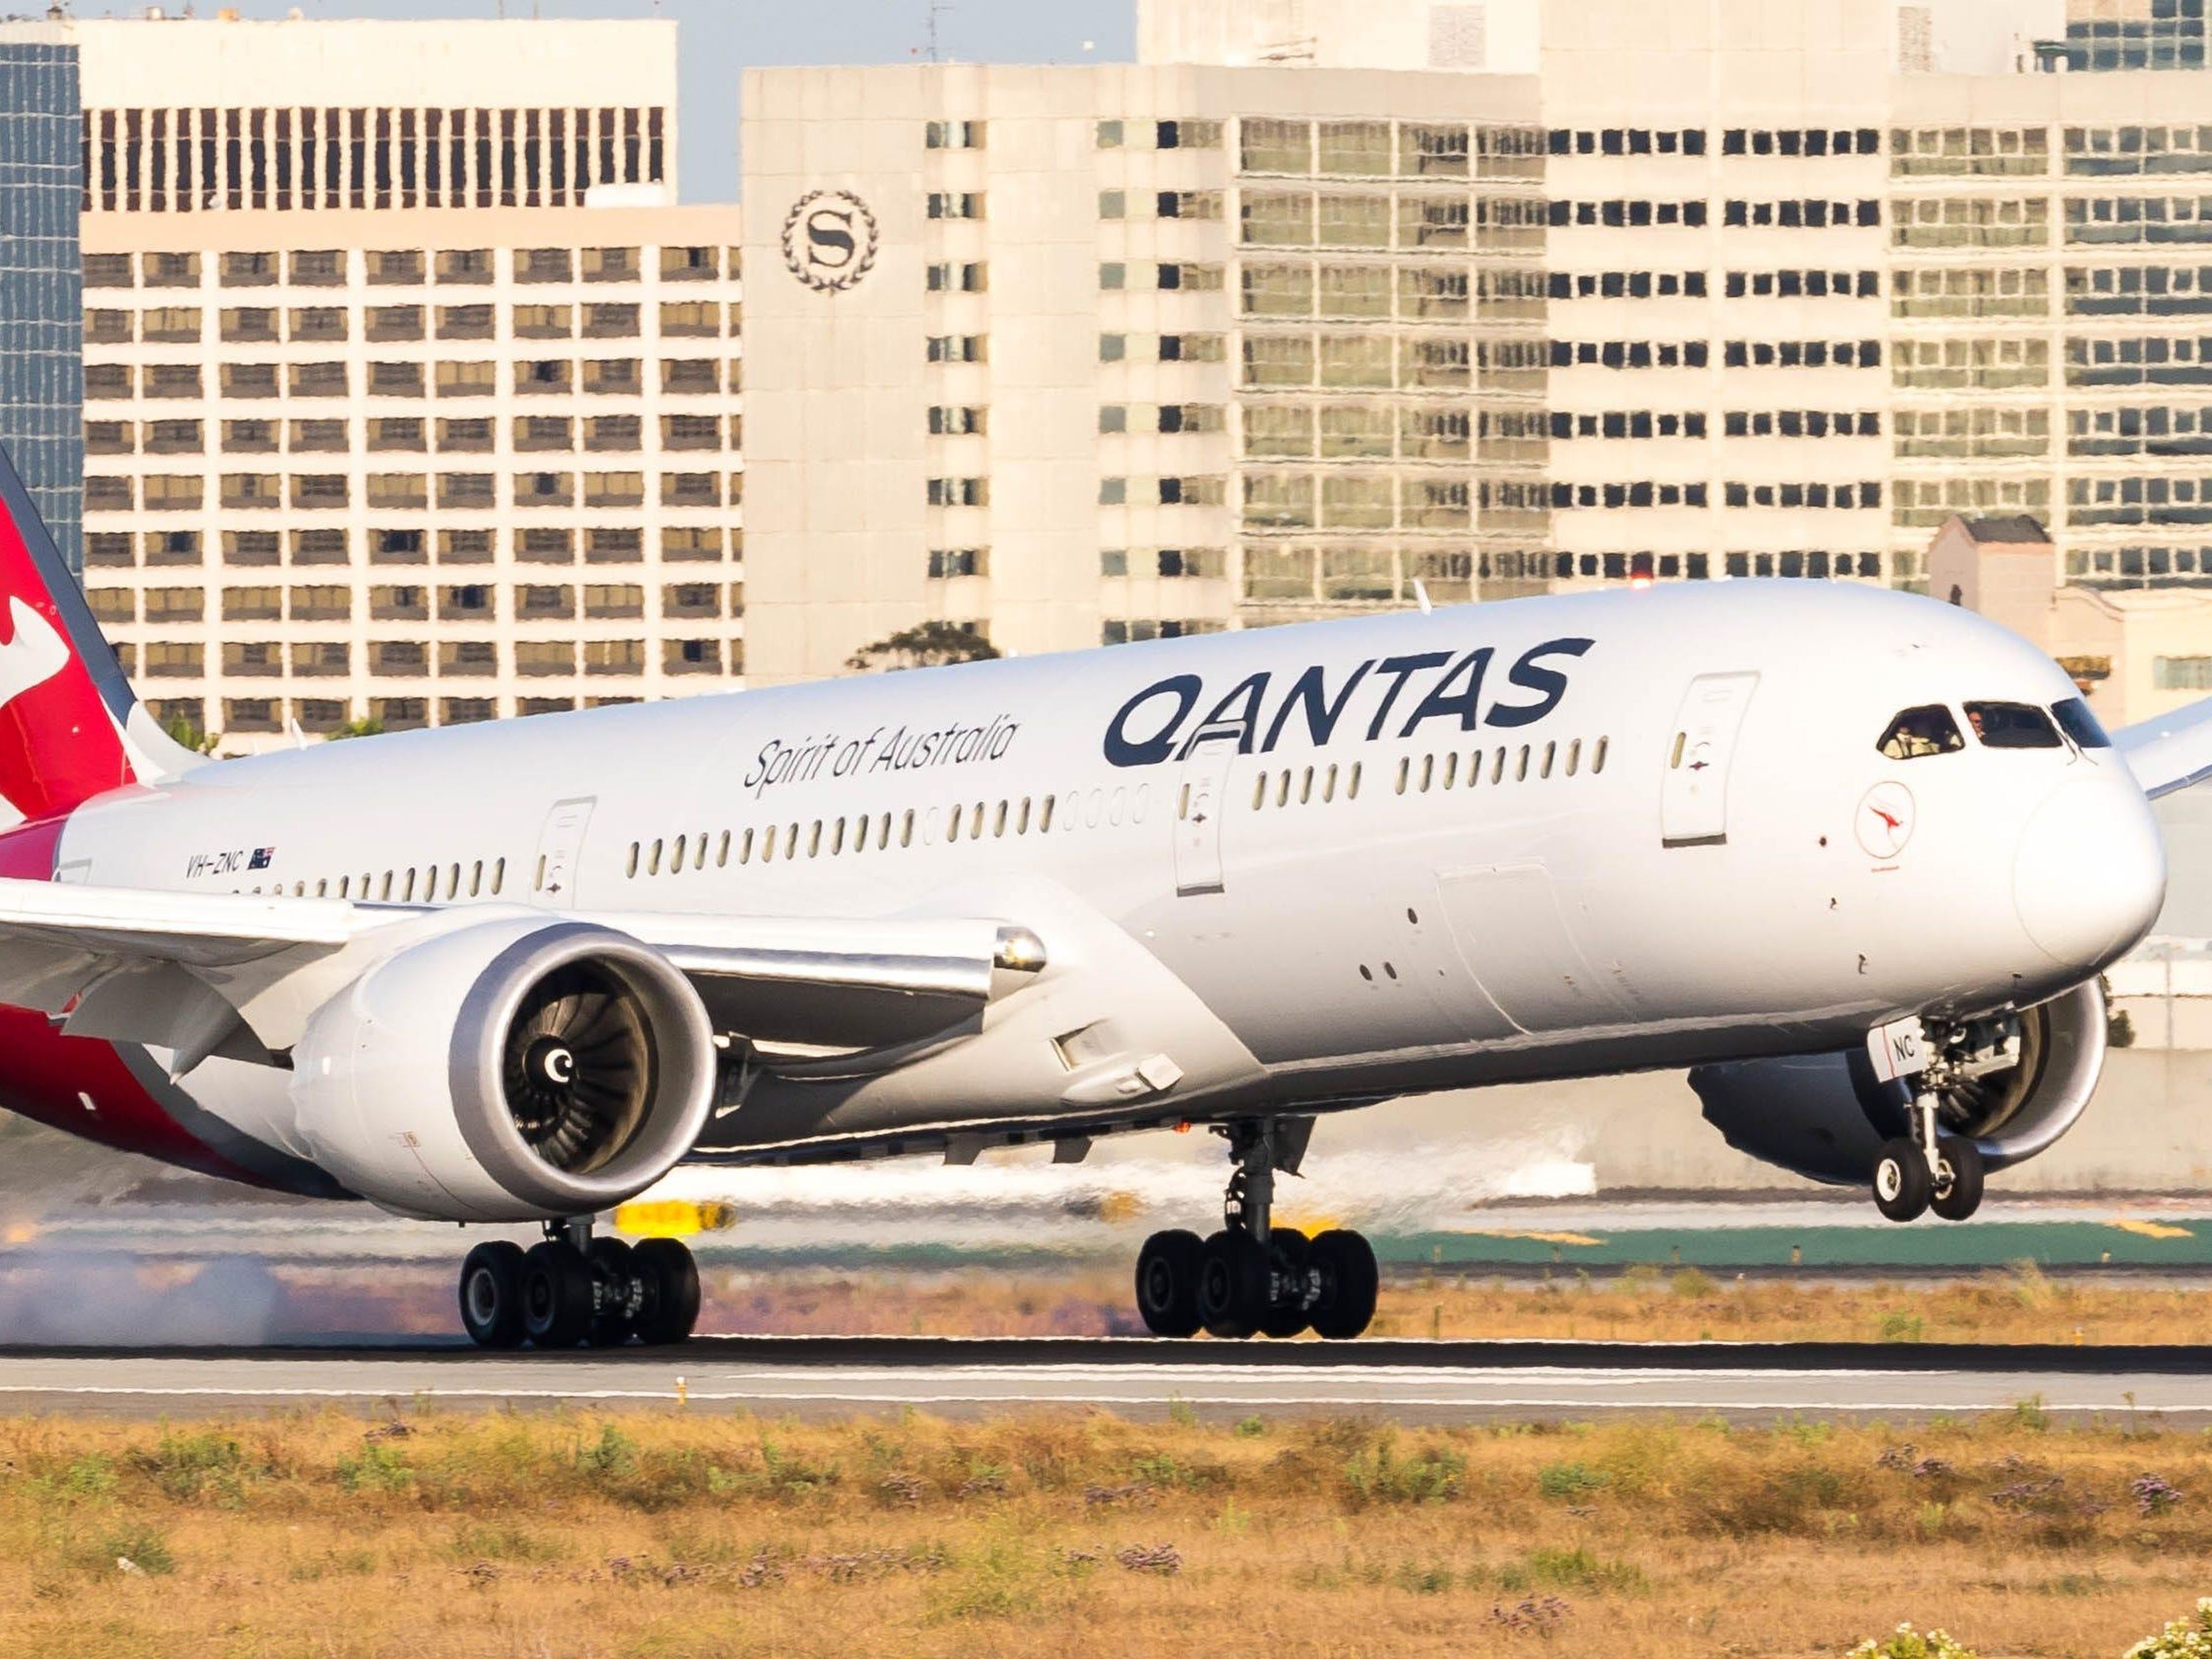 A Qantas Boeing 787 Dreamliner. christopheronglv / Shutterstock.com